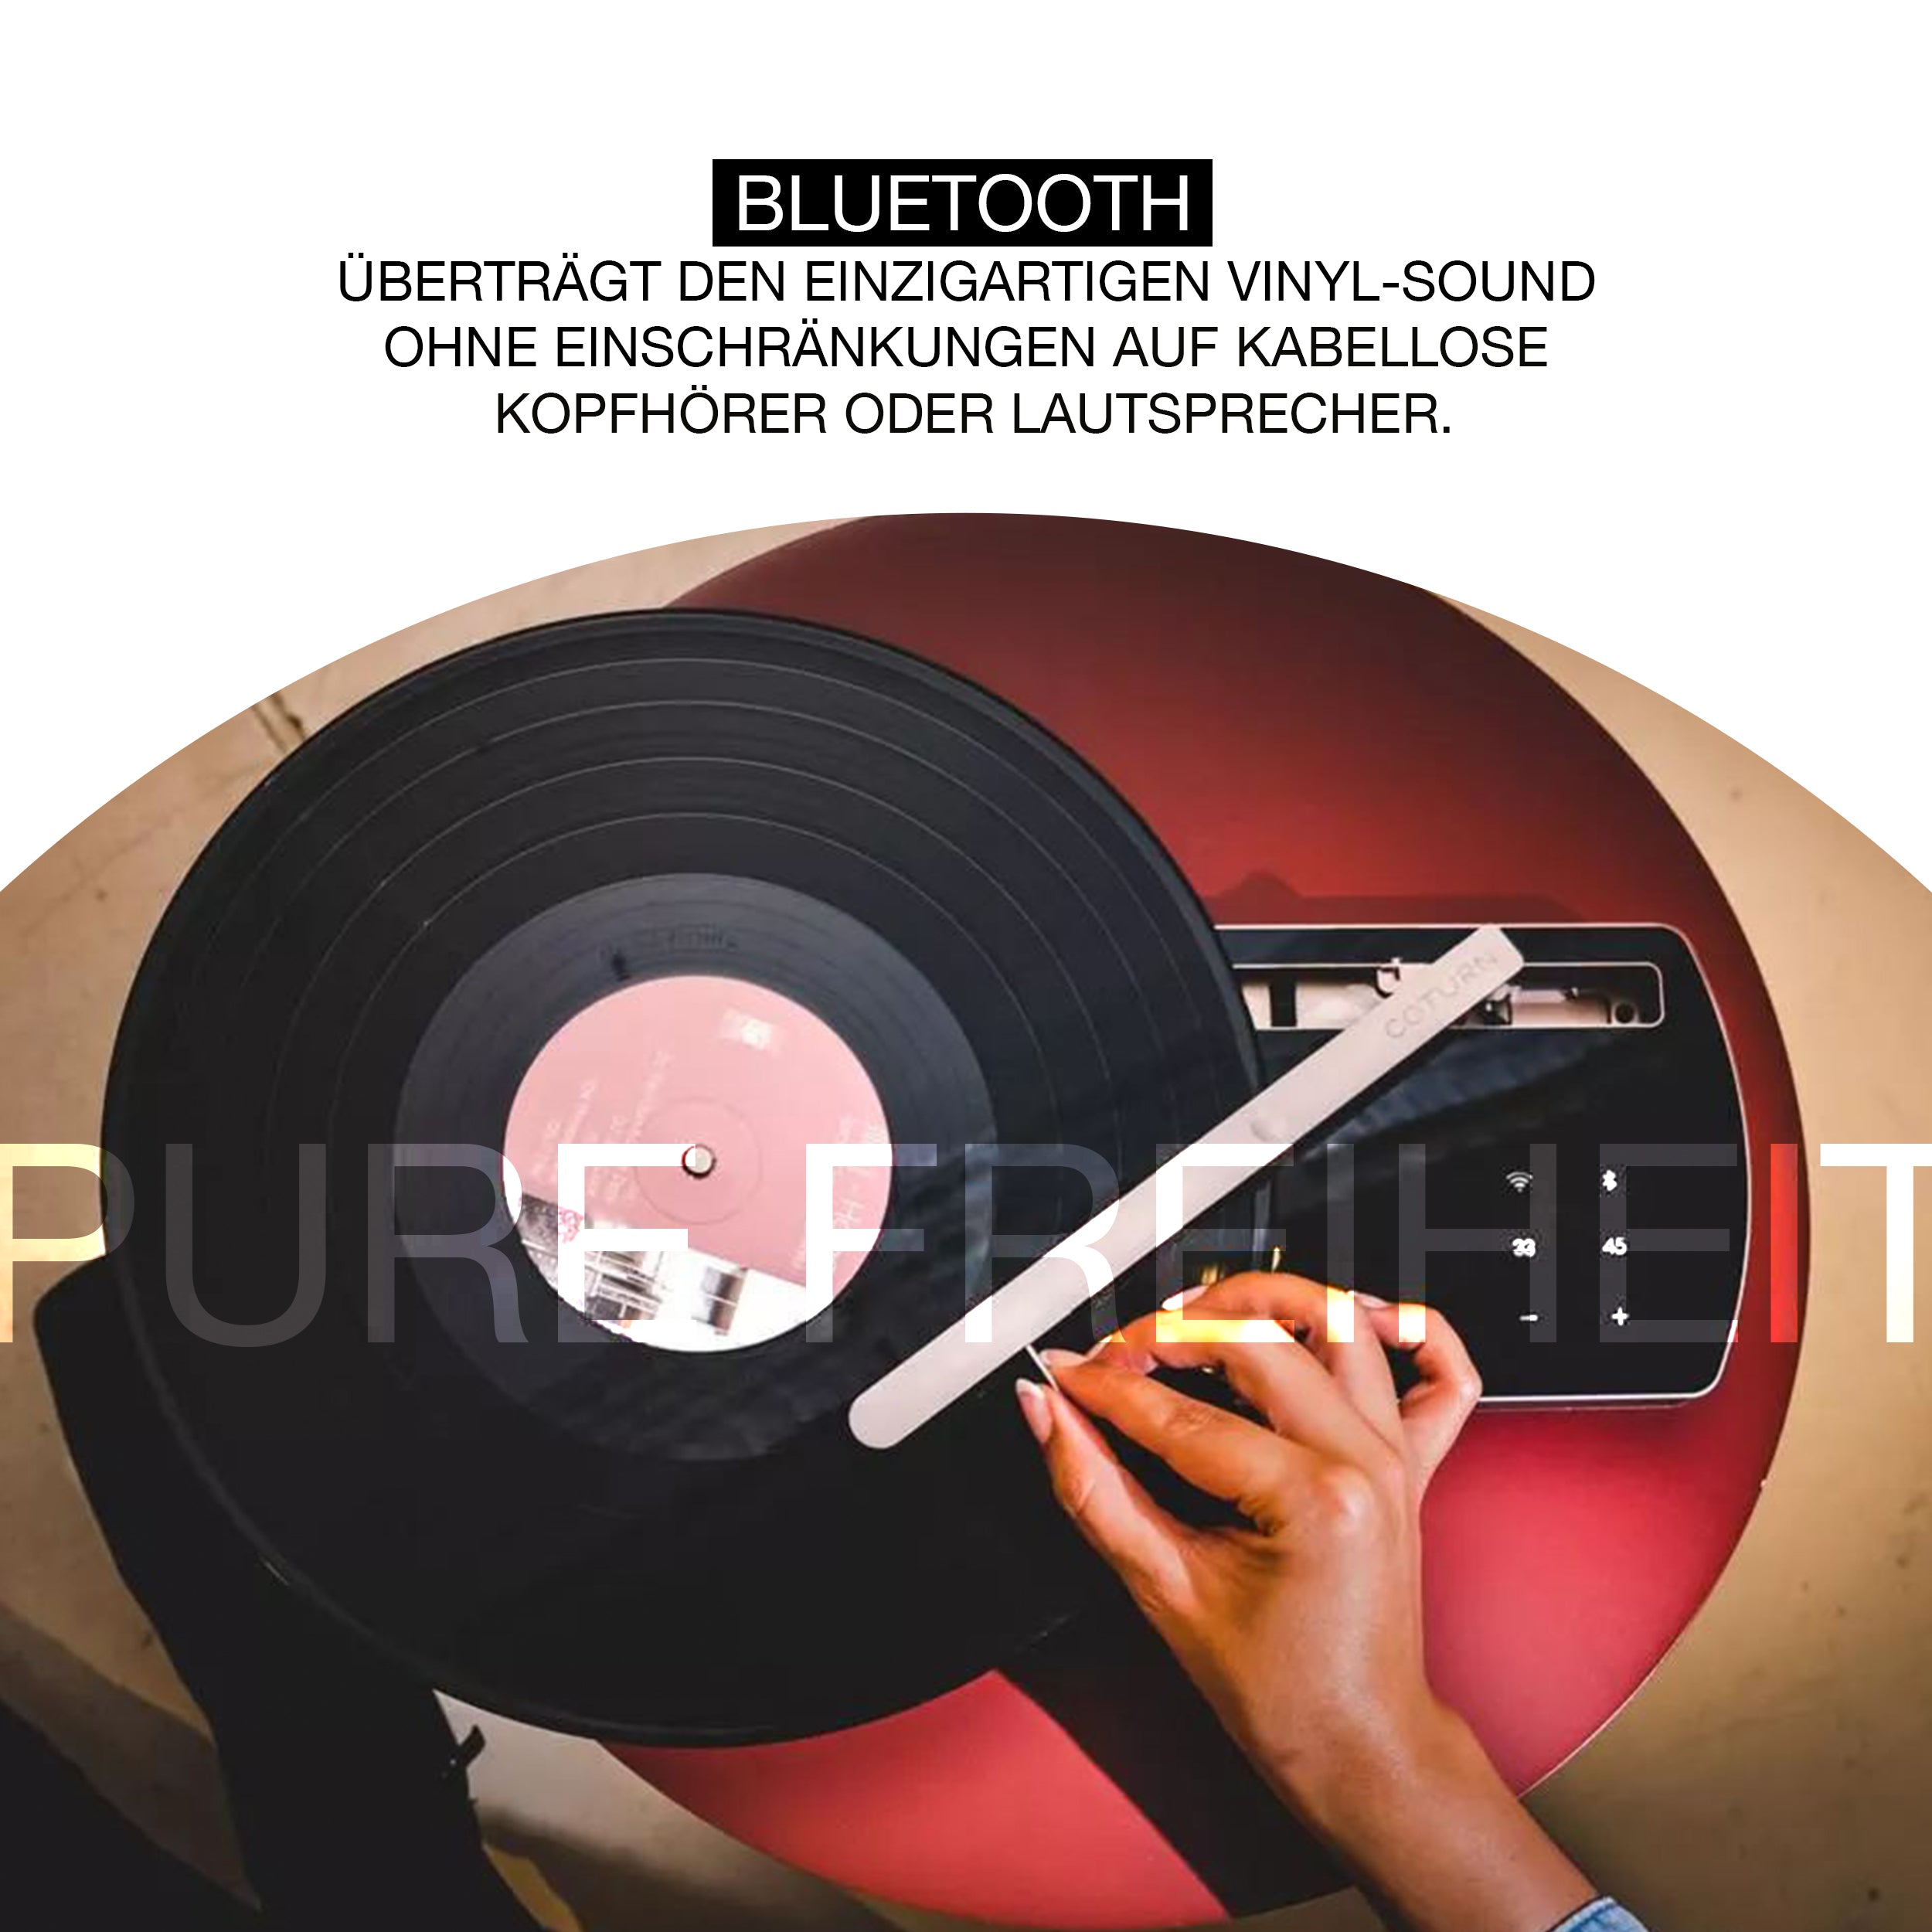 Portabler Plattenspieler mit Bluetooth (Portable Turntable) – Coturn CT-01 blue